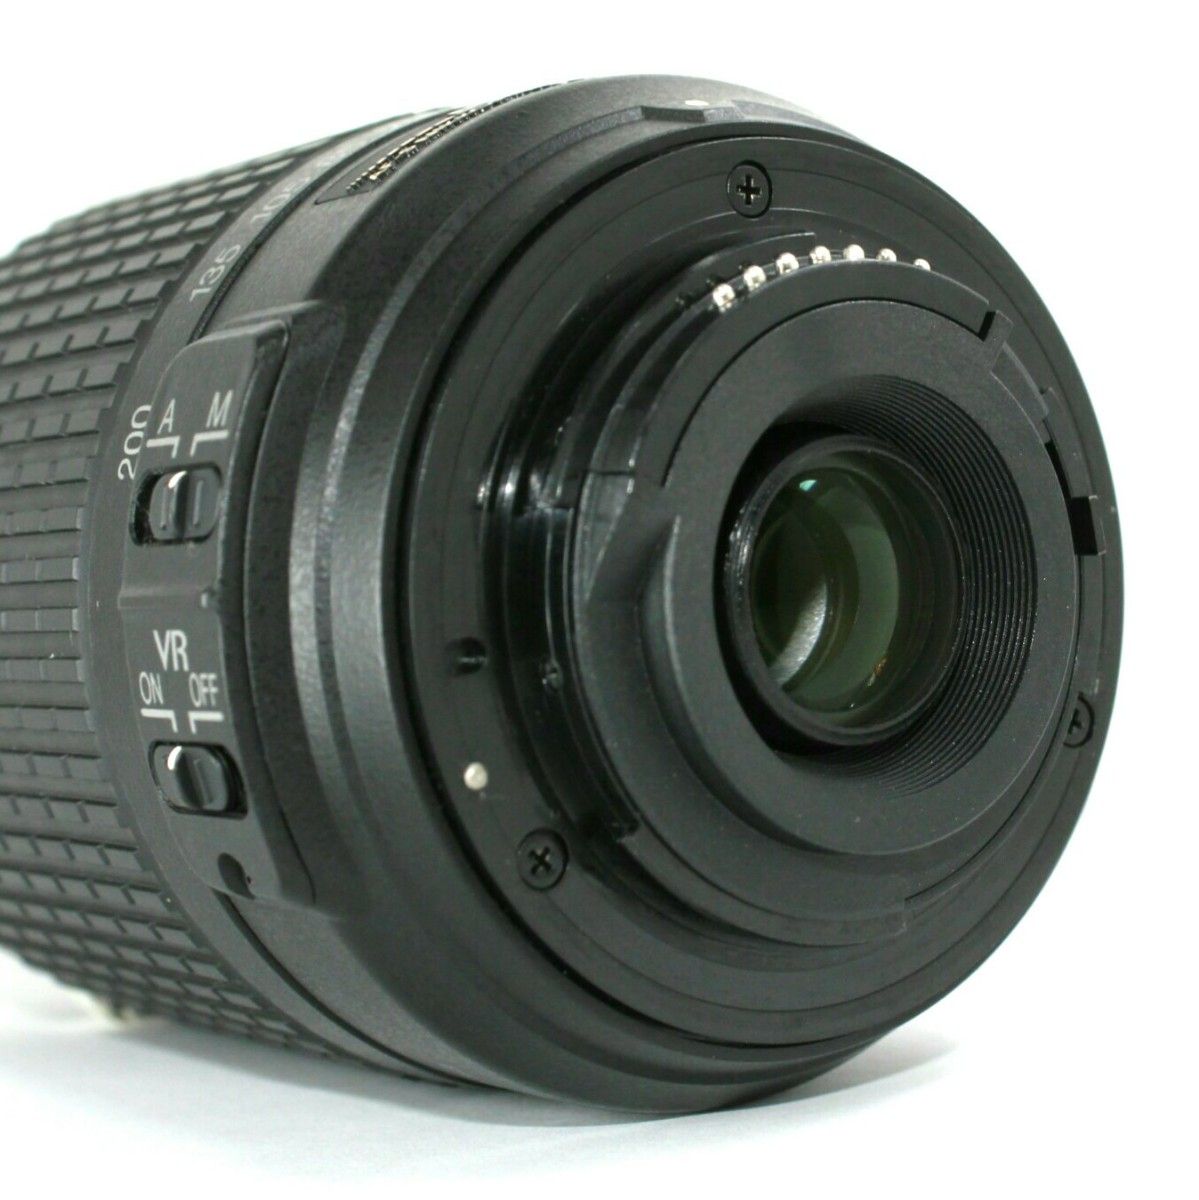 Nikon AF-S DX 55-200mm VR 手ブレ補正付き 超望遠ズームレンズ☆完動極美品☆